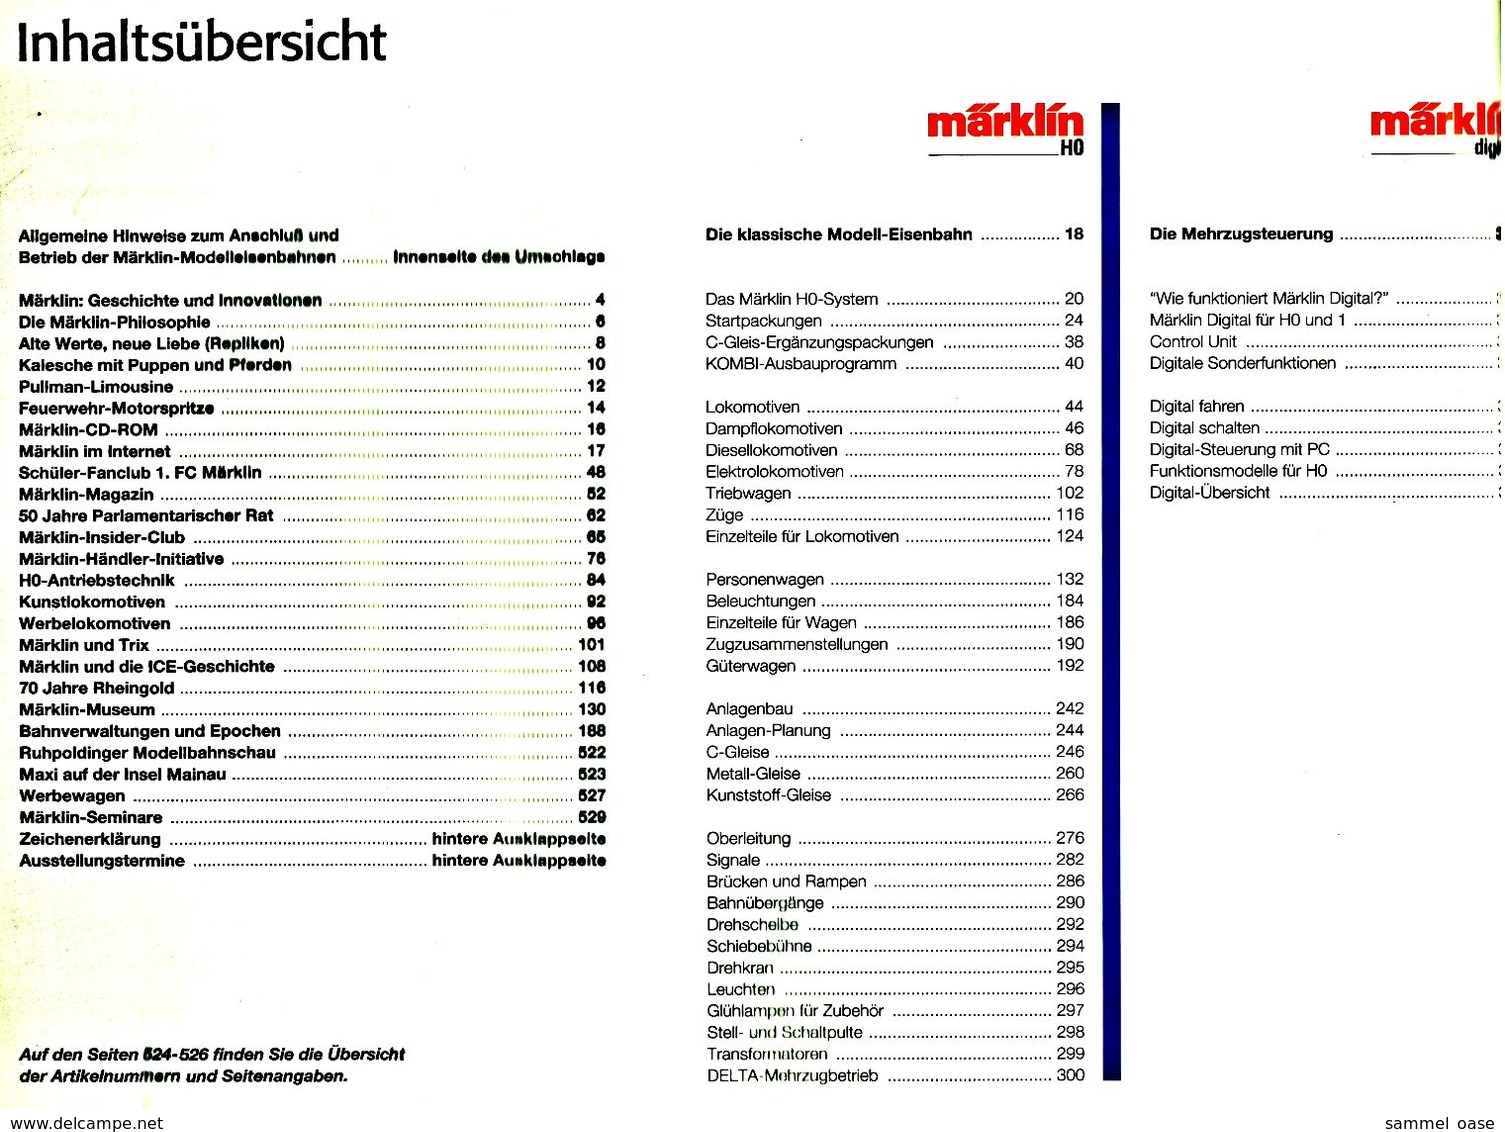 Märklin Katalog Gesammtprogramm 1998/99 DI  -  528 Seiten - German